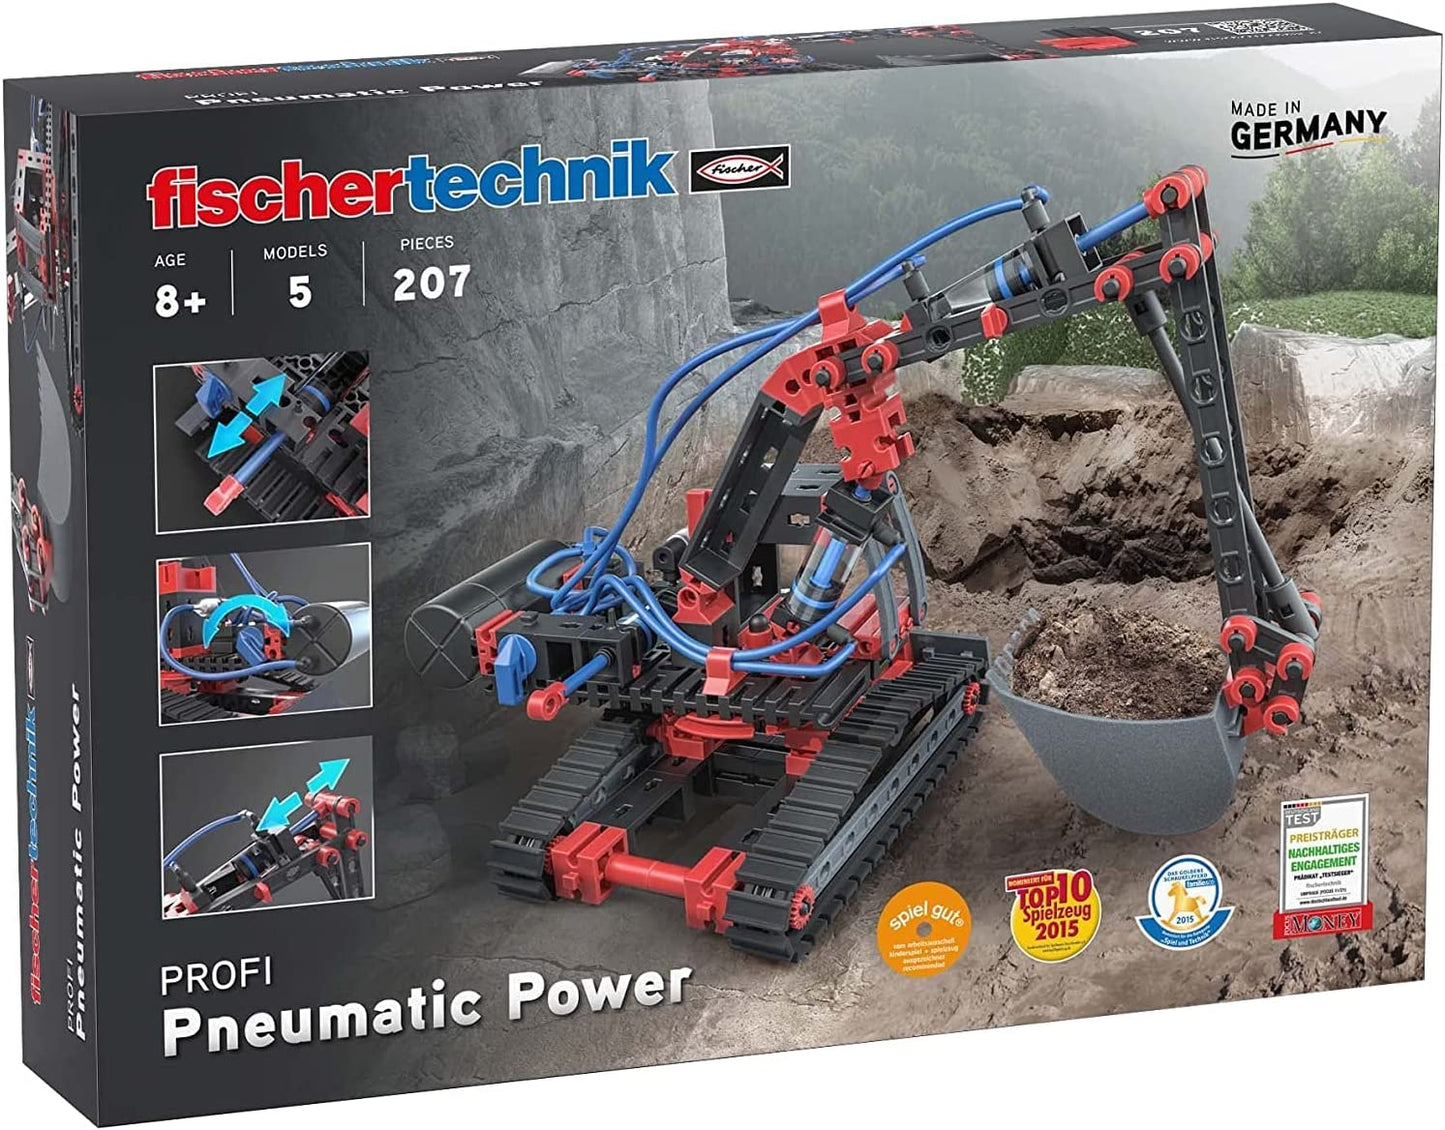 fischertechnik Pneumatic Power Building Kit